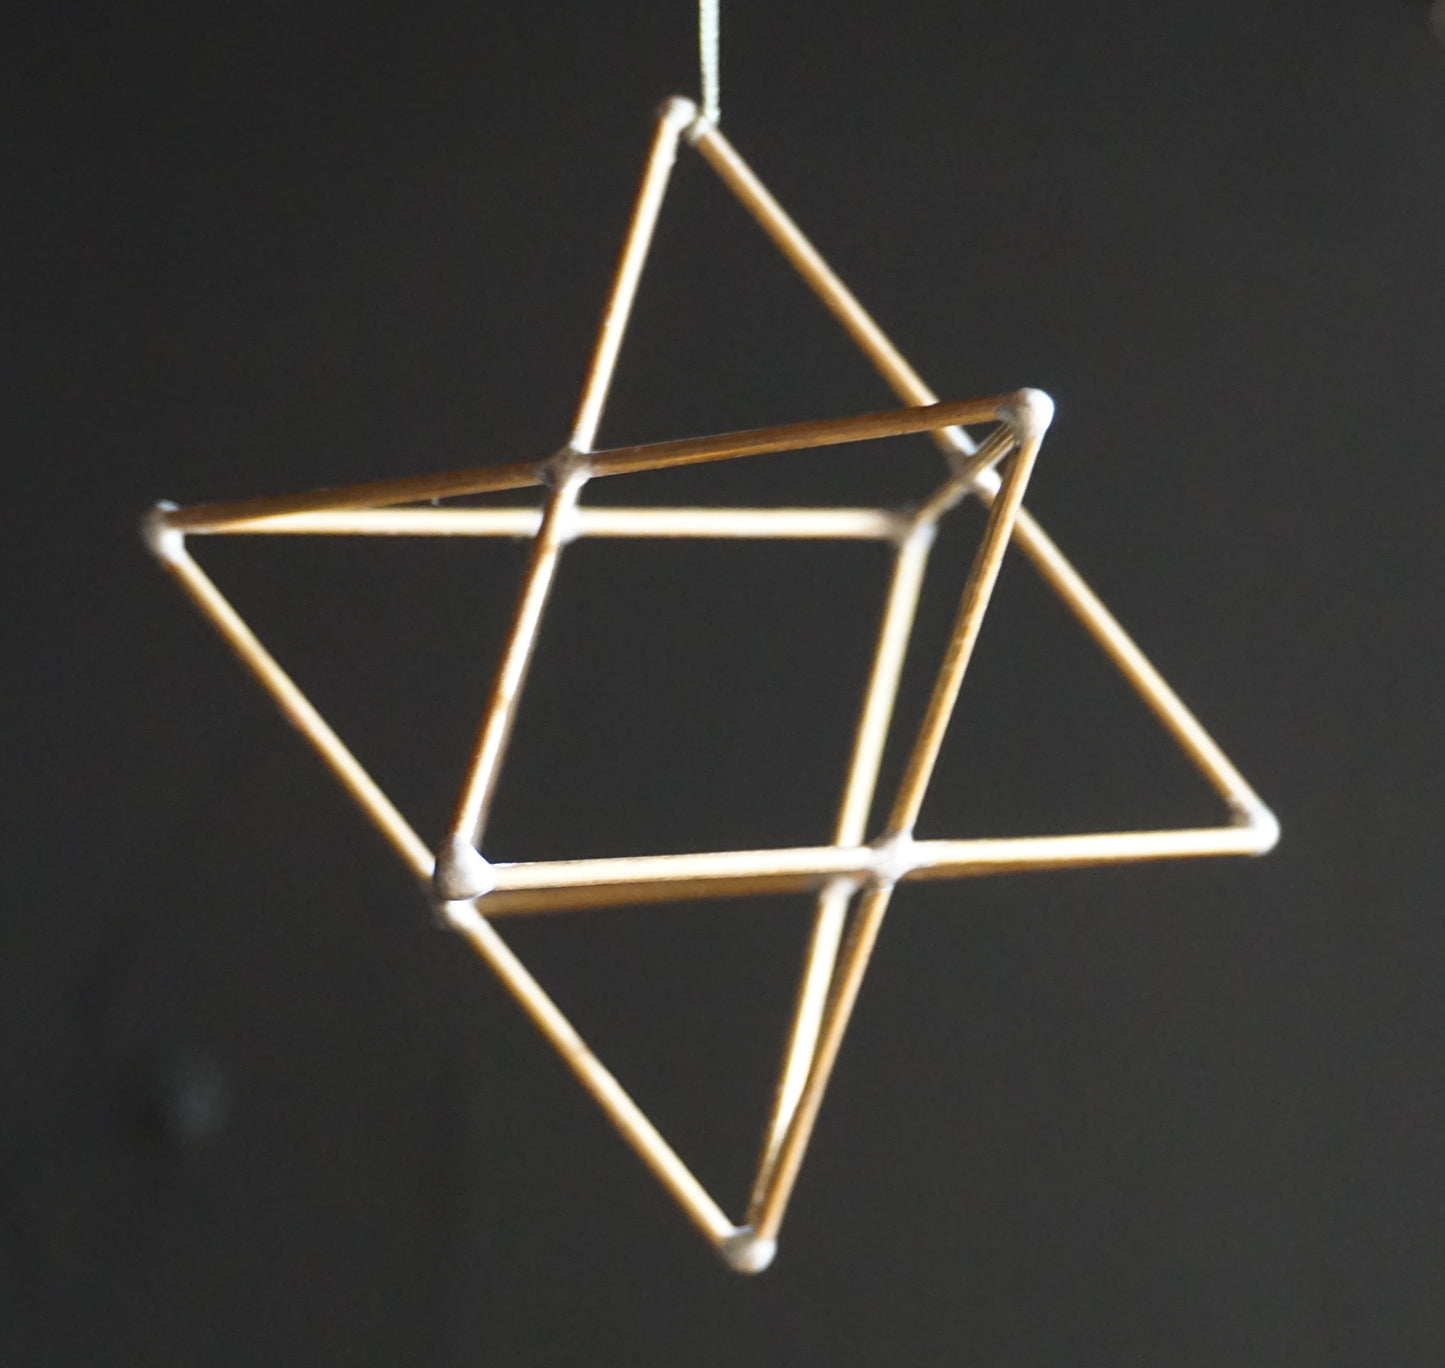 Ref.ST0039 - Star Tetrahedron